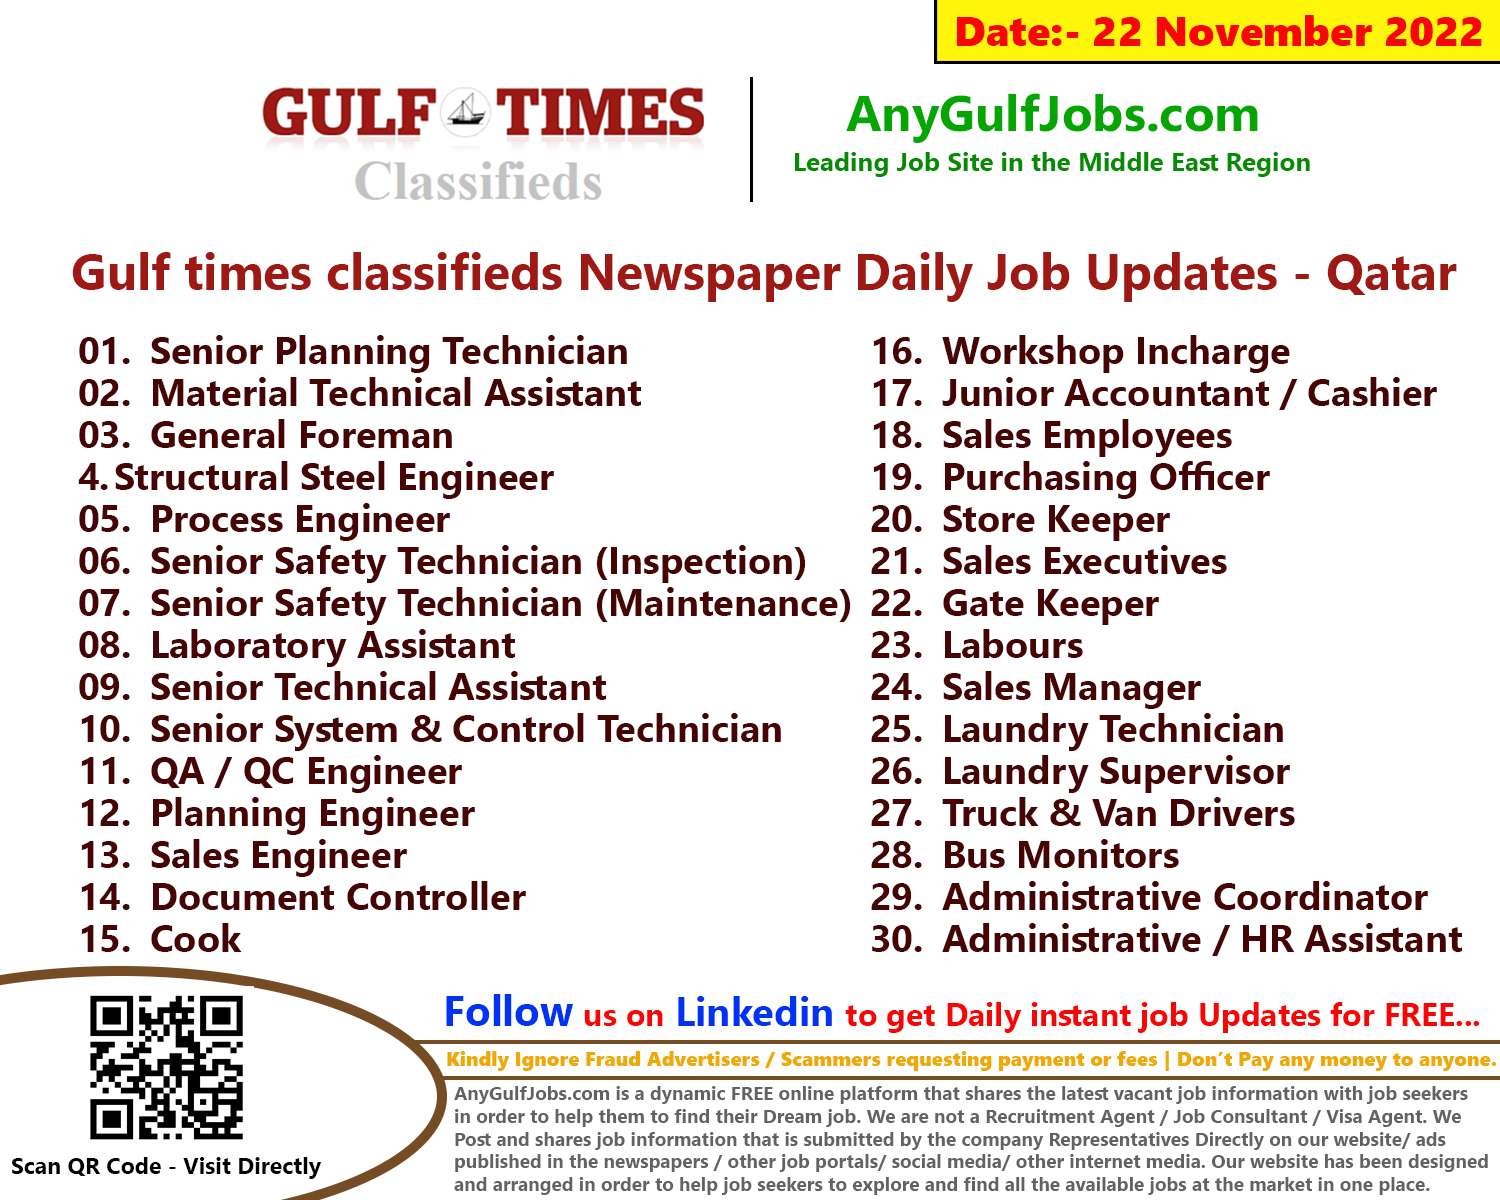 Gulf times classifieds Job Vacancies Qatar - 22 November 2022